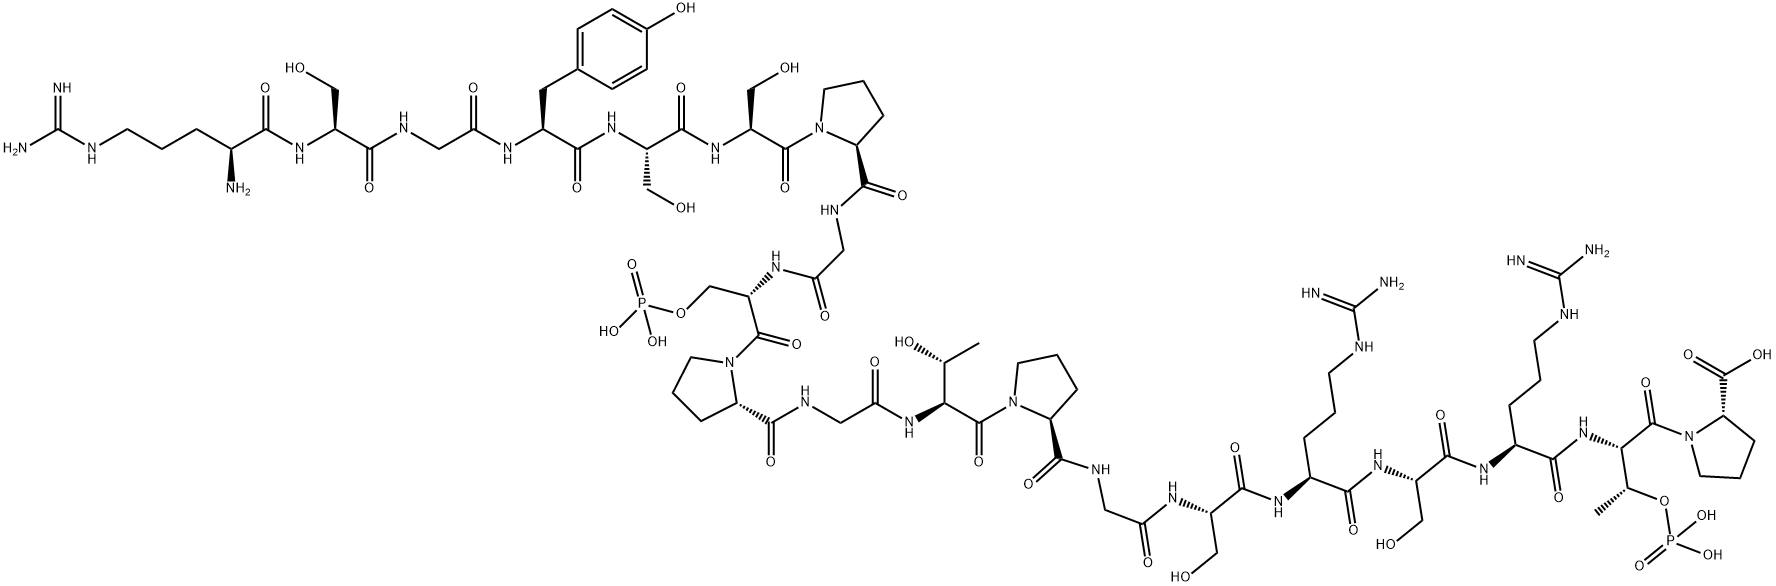 (Ser(POH)22,Thr(POH)2)-Tau Peptide (194-213) Structure